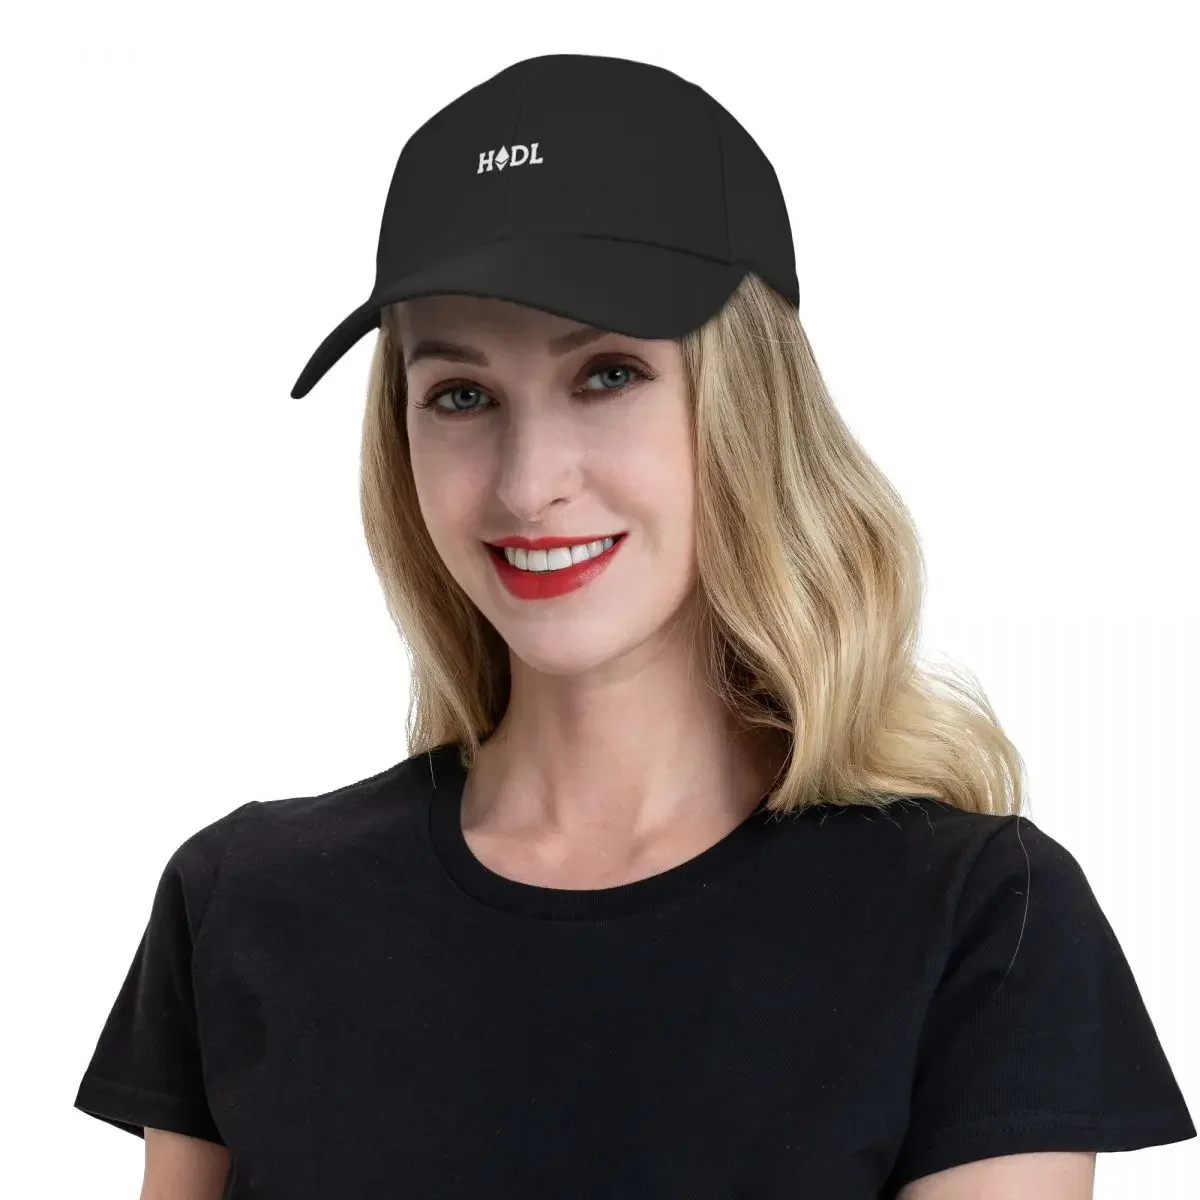 Ethereum Logo ETH Coin Crypto Bitcoin Trader Miner Gift Baseball Cap Dropshipping sun hat Elegant Women's Hats Men's